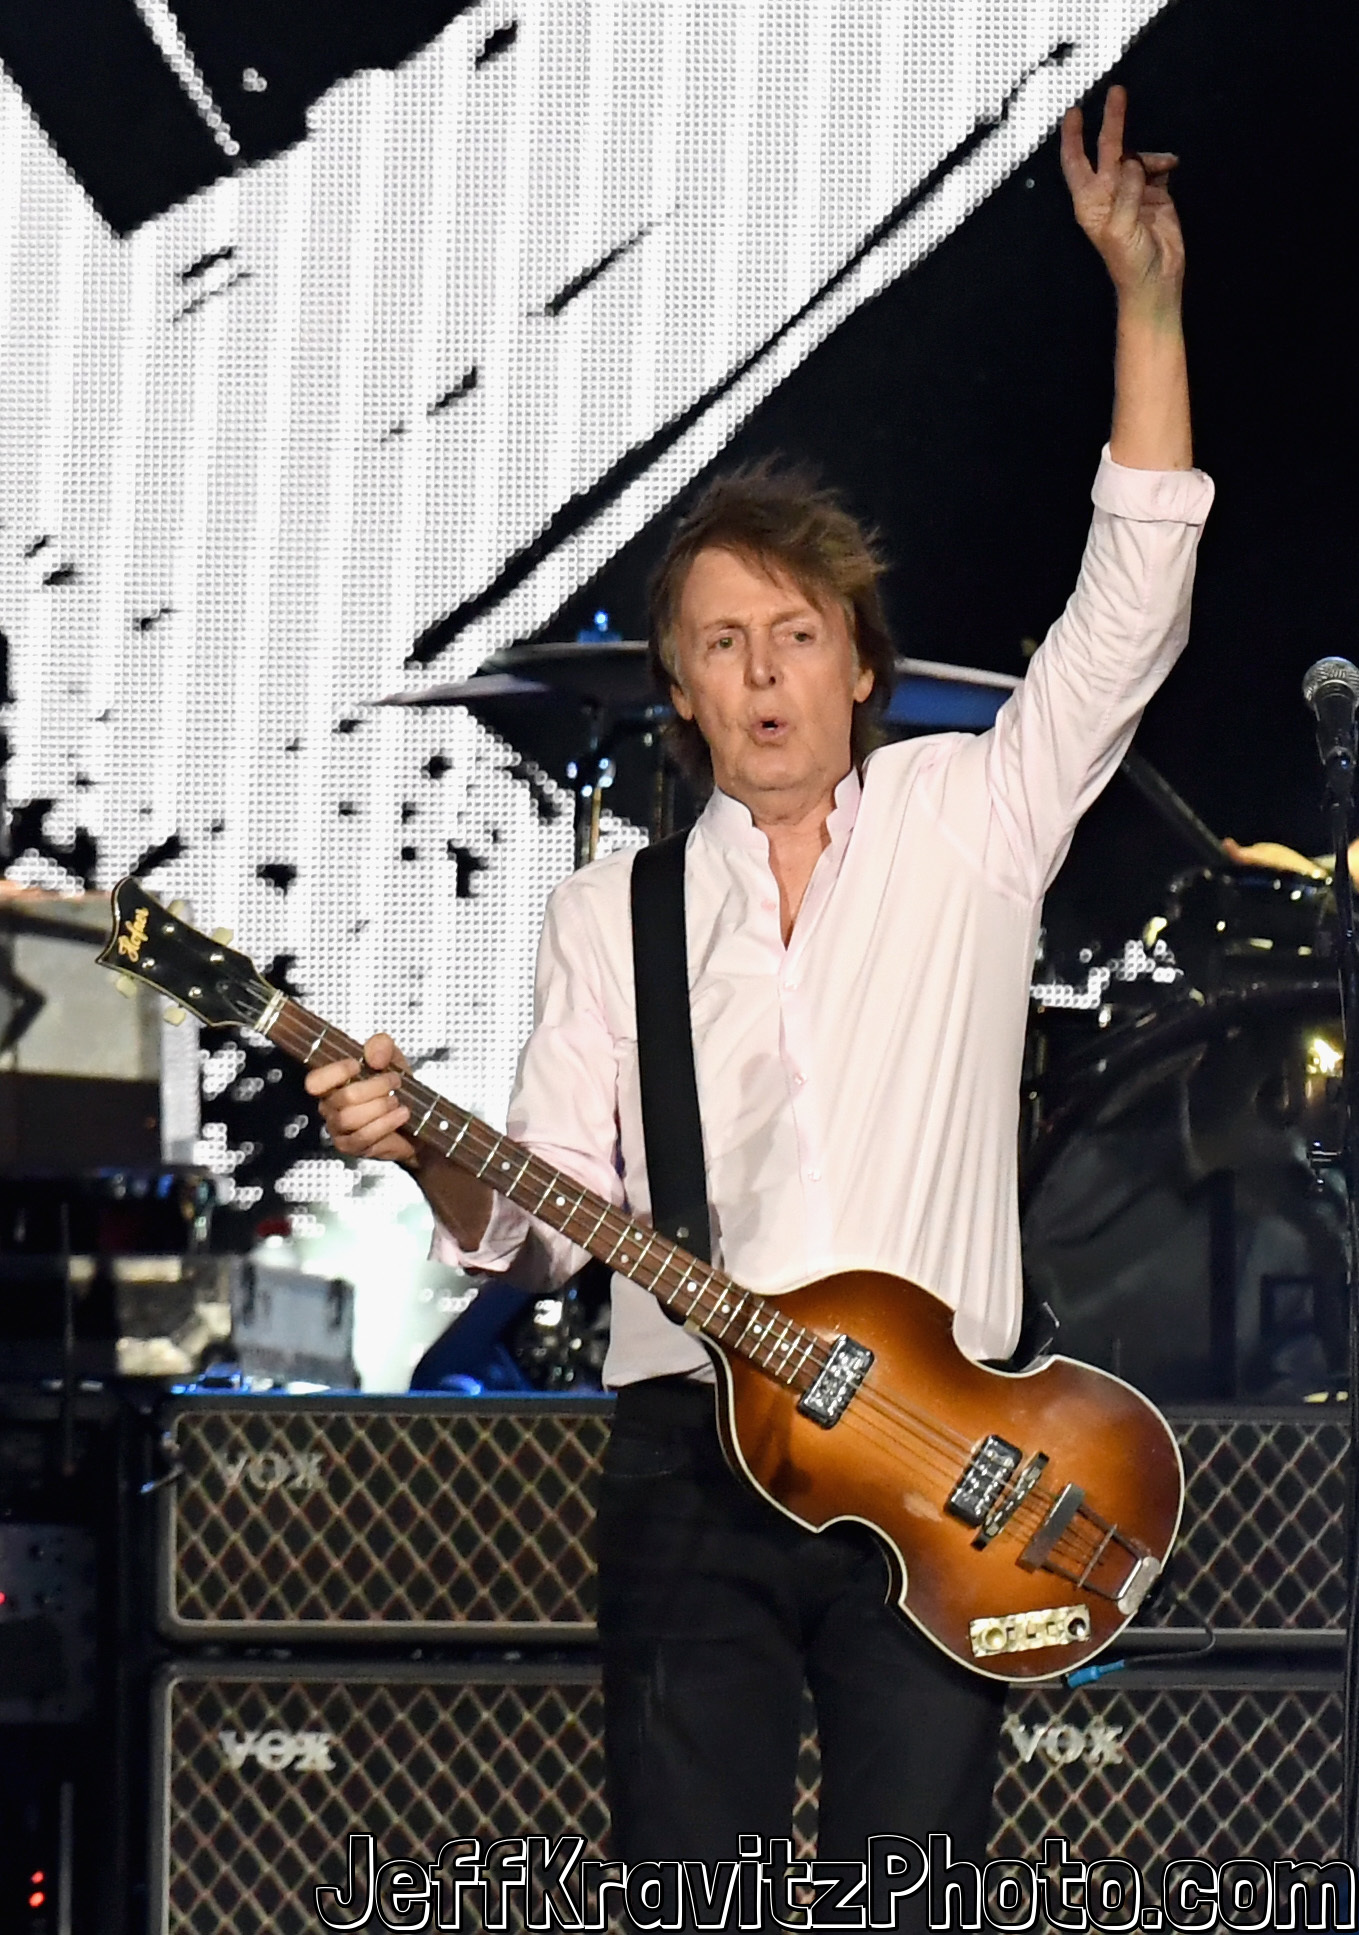 Paul McCartney's Last Minute Bar Show Last Night Looked Amazingly Cool